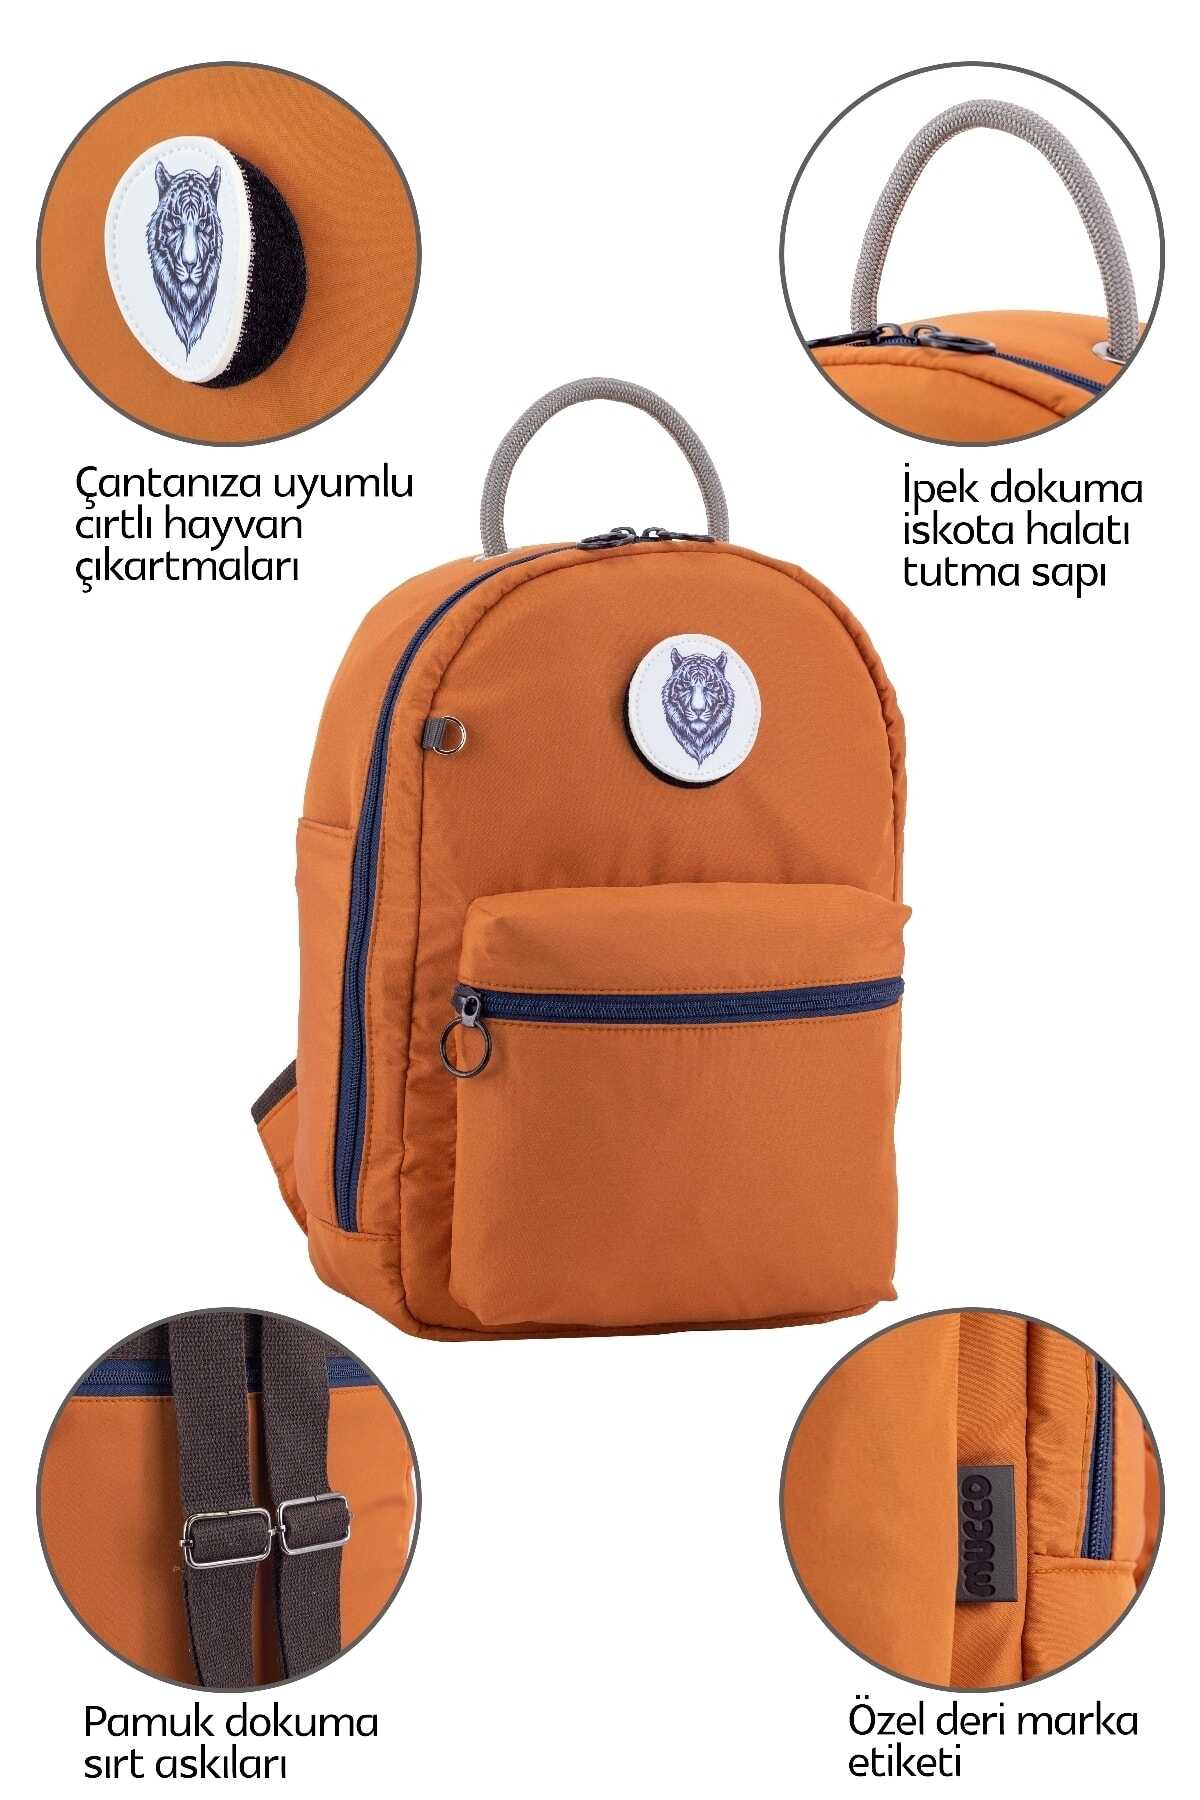 کیف لوازم کودک جیب بزرگ نارنجی برند MUCCO 